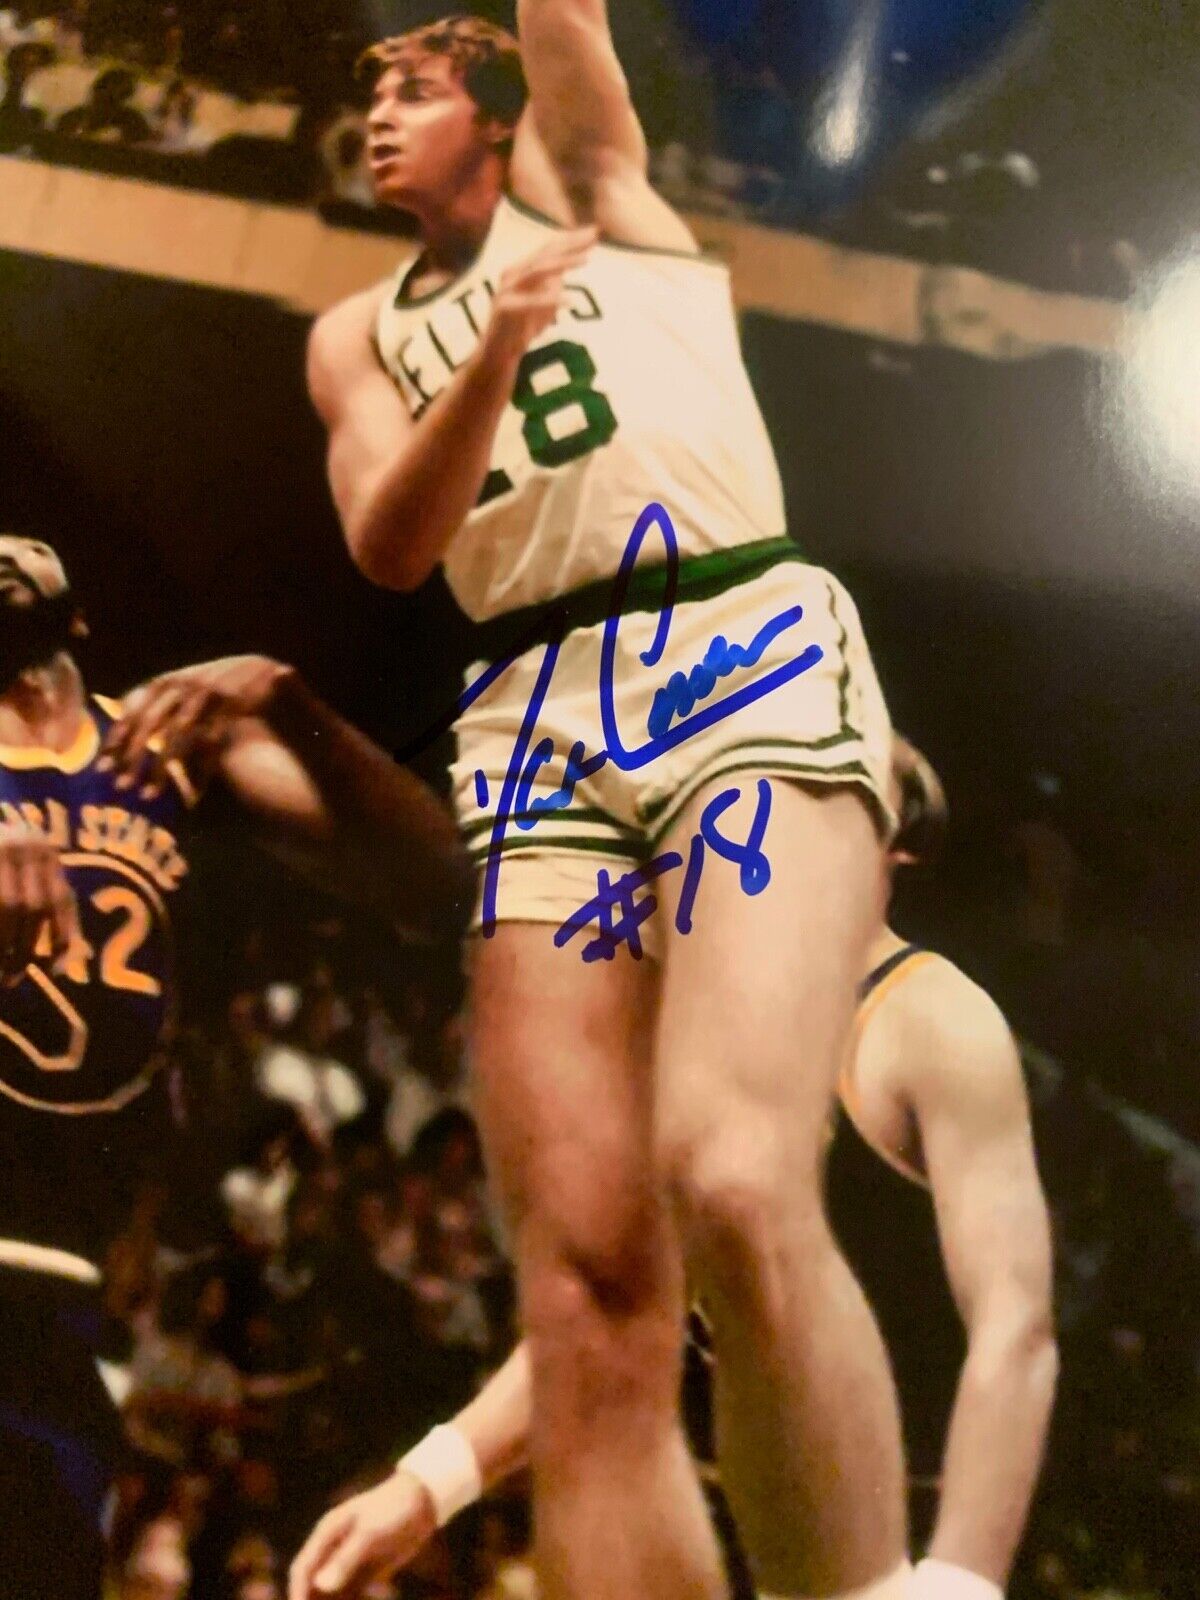 David Cowens Boston Celtics Autographed 8x10 Photo PSA COA AI63701 NBA